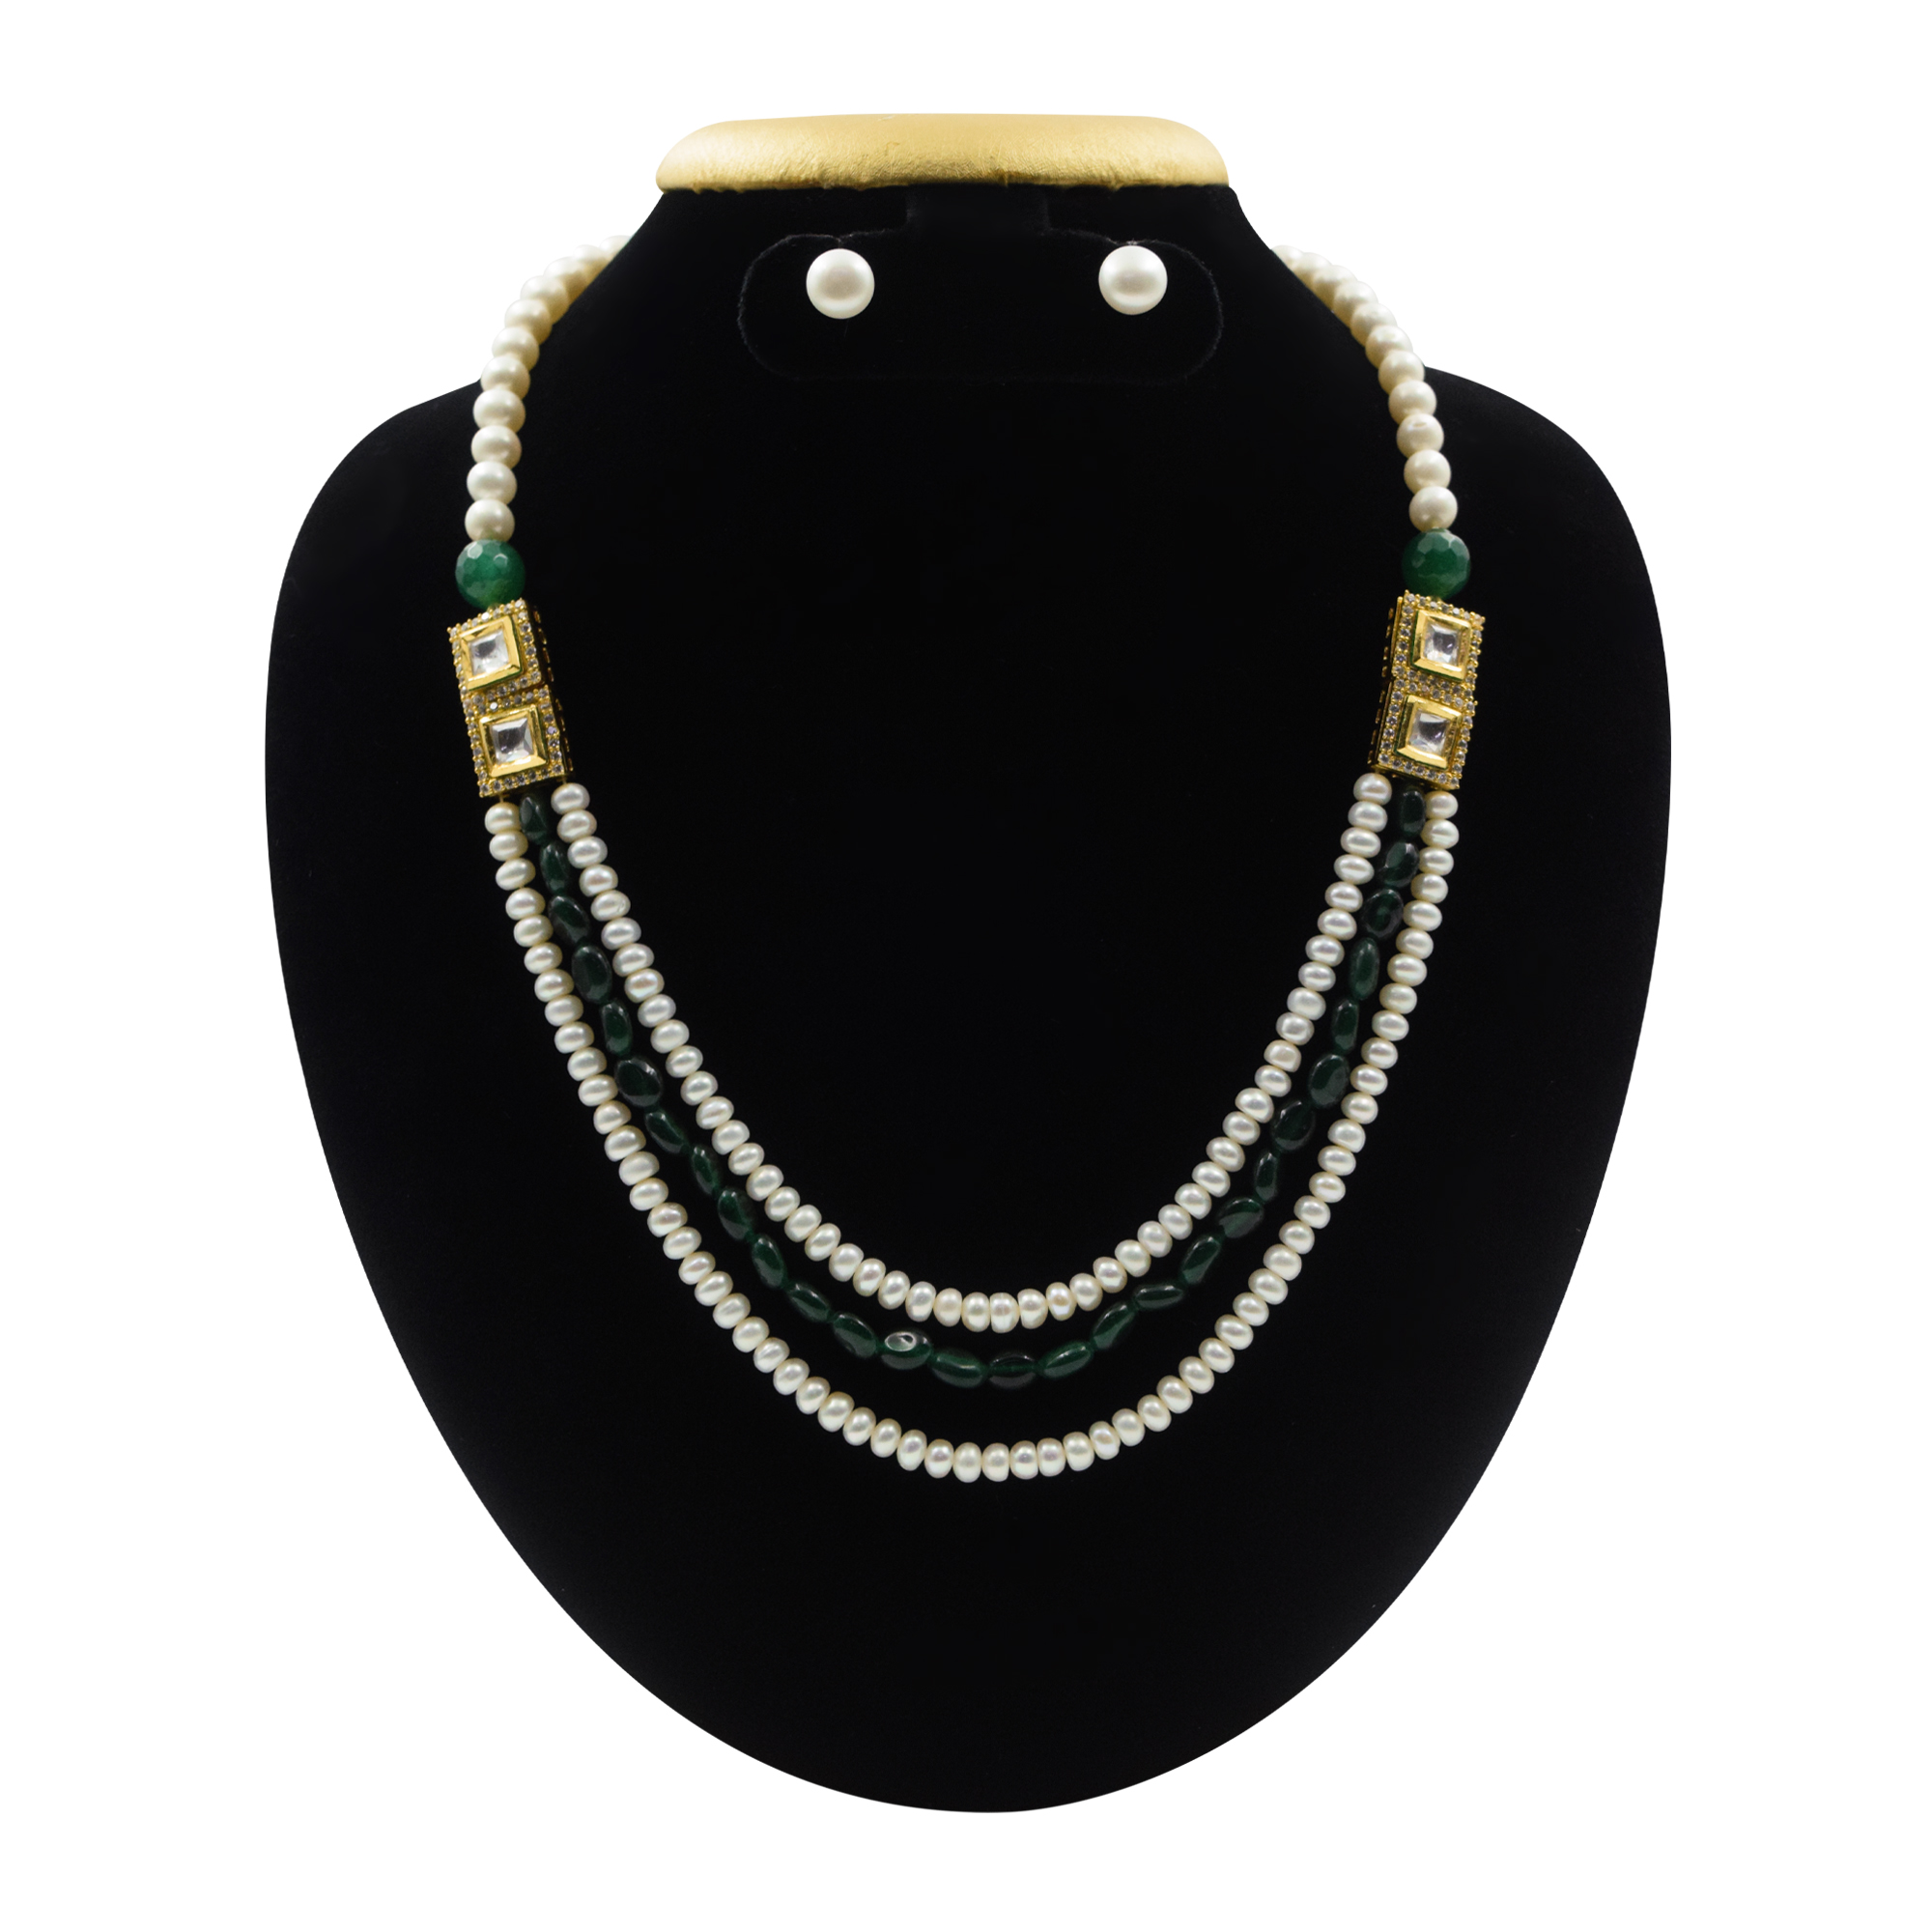 Black Onyx & Pearl Silver Necklace at Rs 7446.00 | चांदी का हार - Art  Palace, Jaipur | ID: 2851920887891